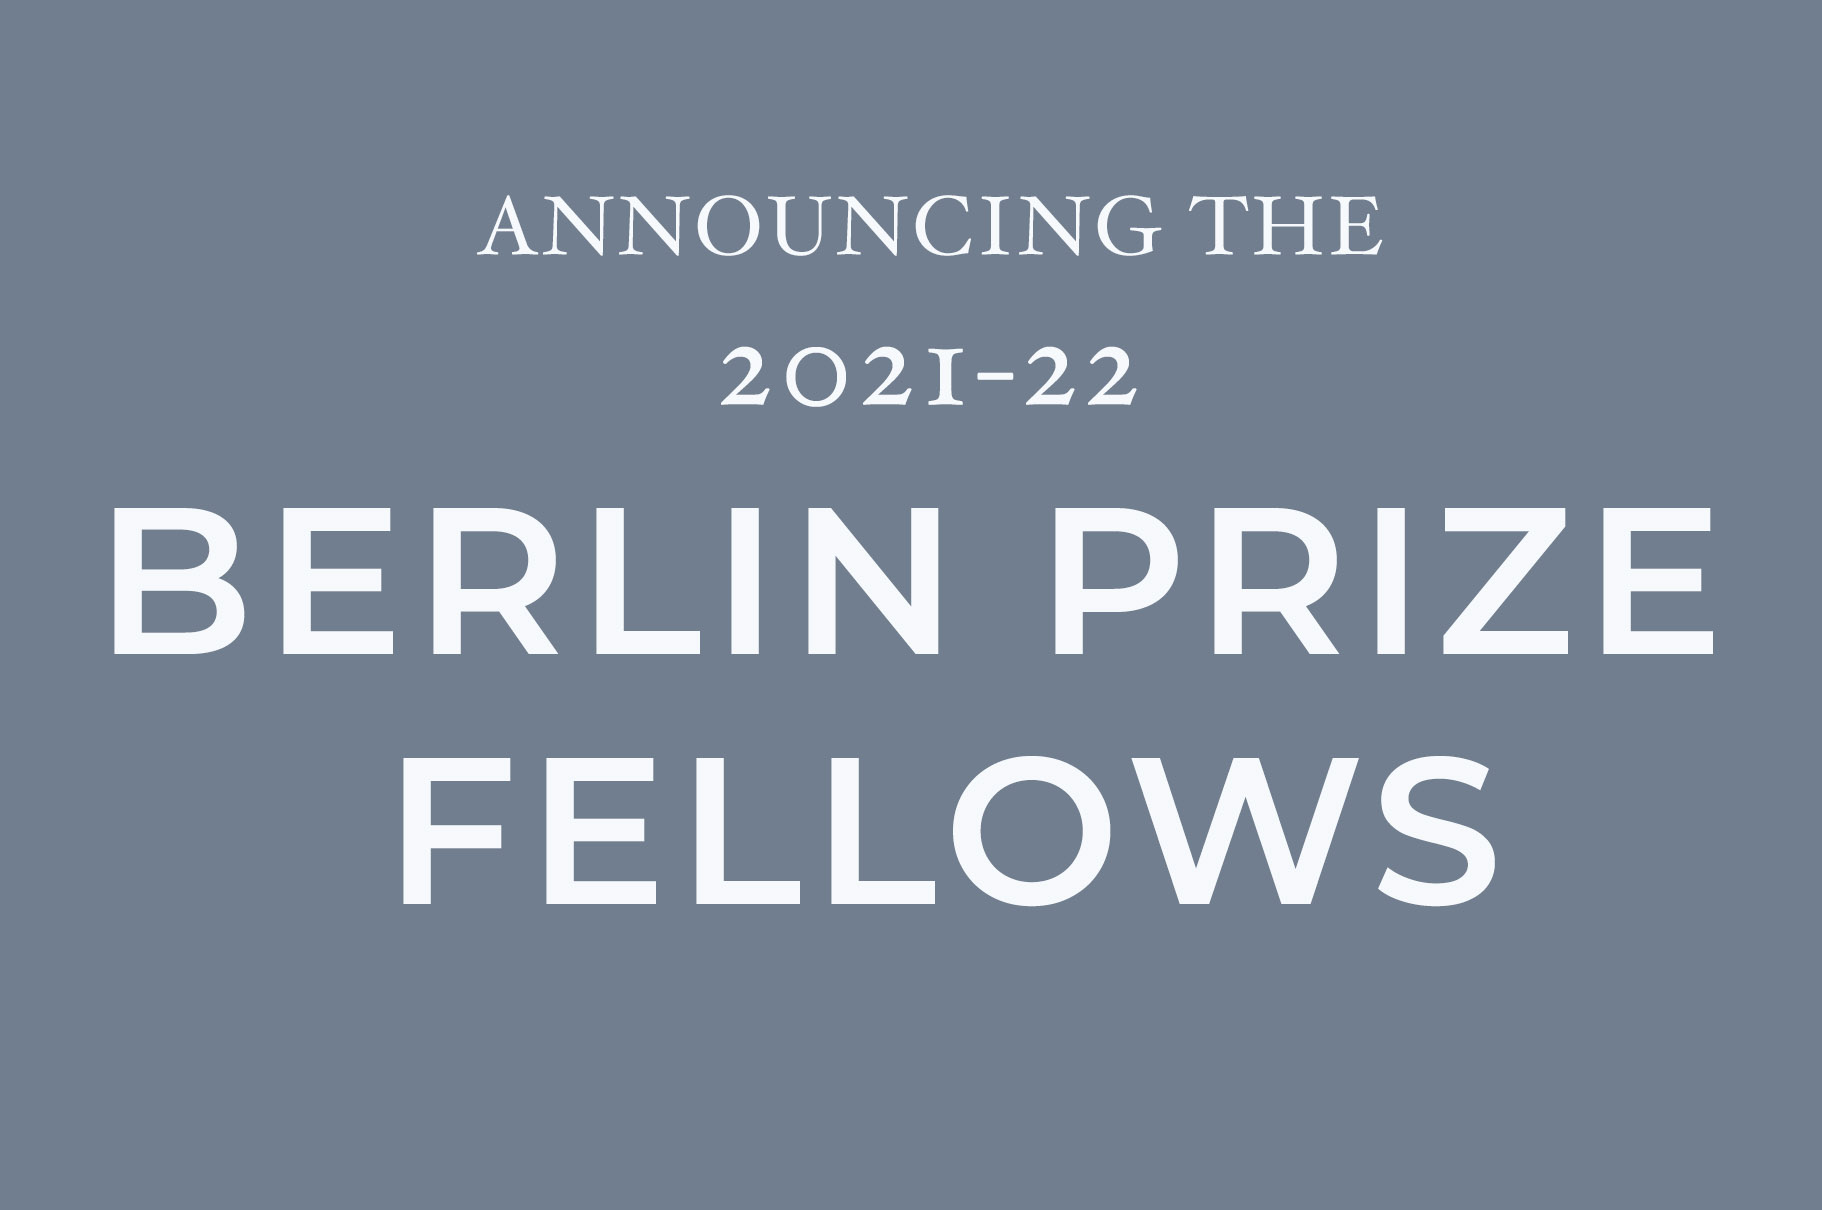 The 2021-22 Berlin Prize Fellows